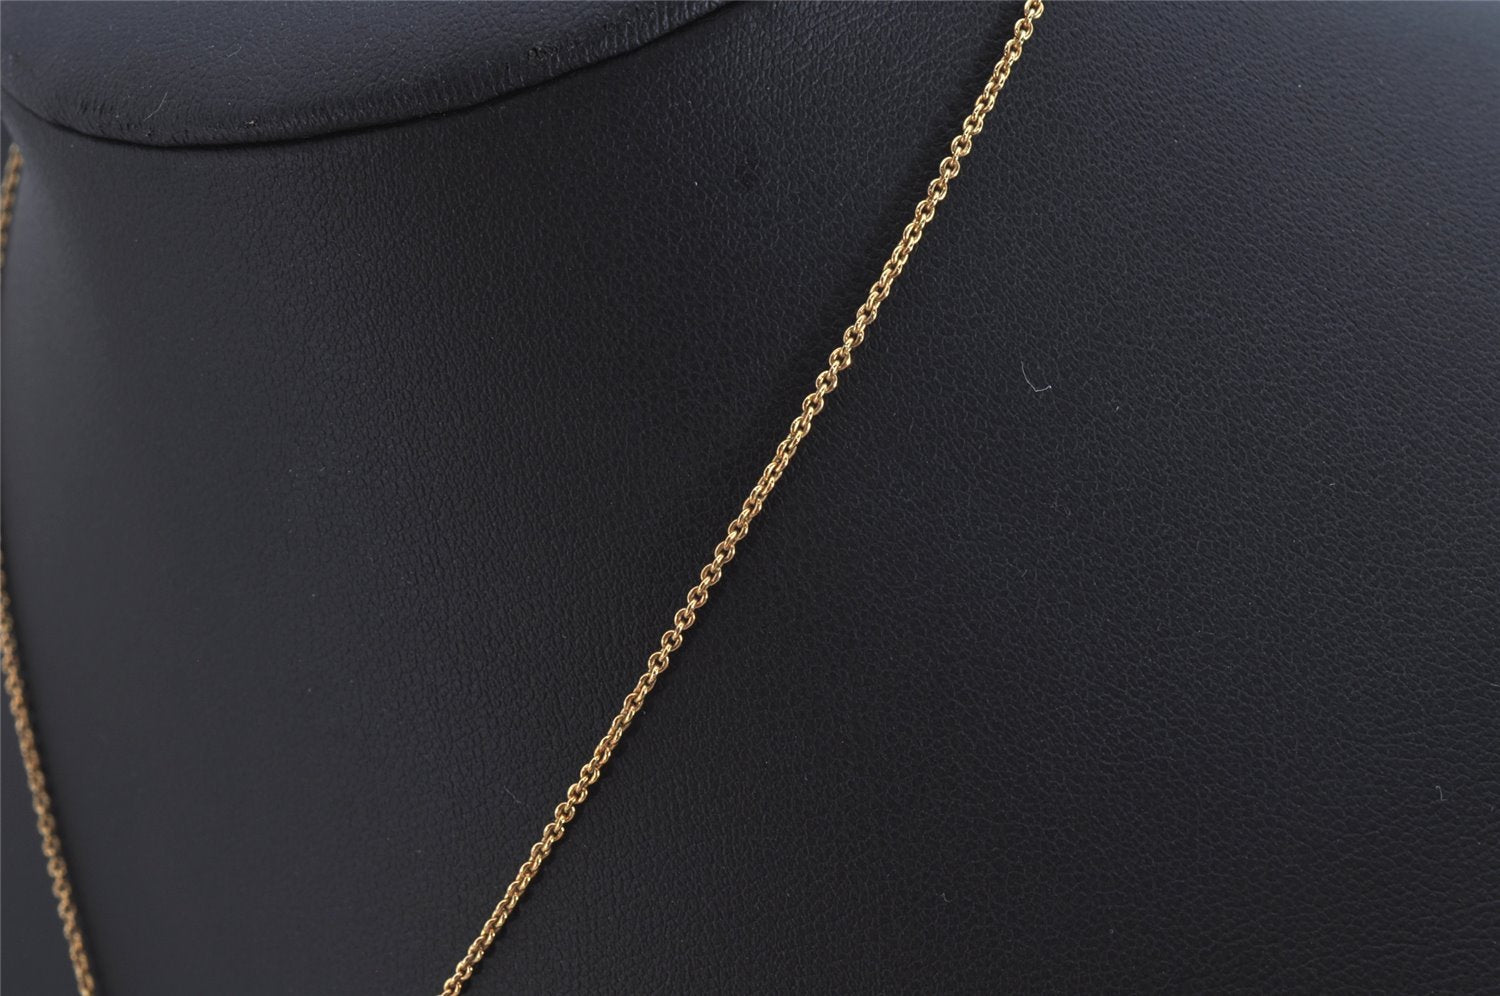 Authentic COACH Vintage Rhinestone Chain Pendant Necklace Gold 8604J